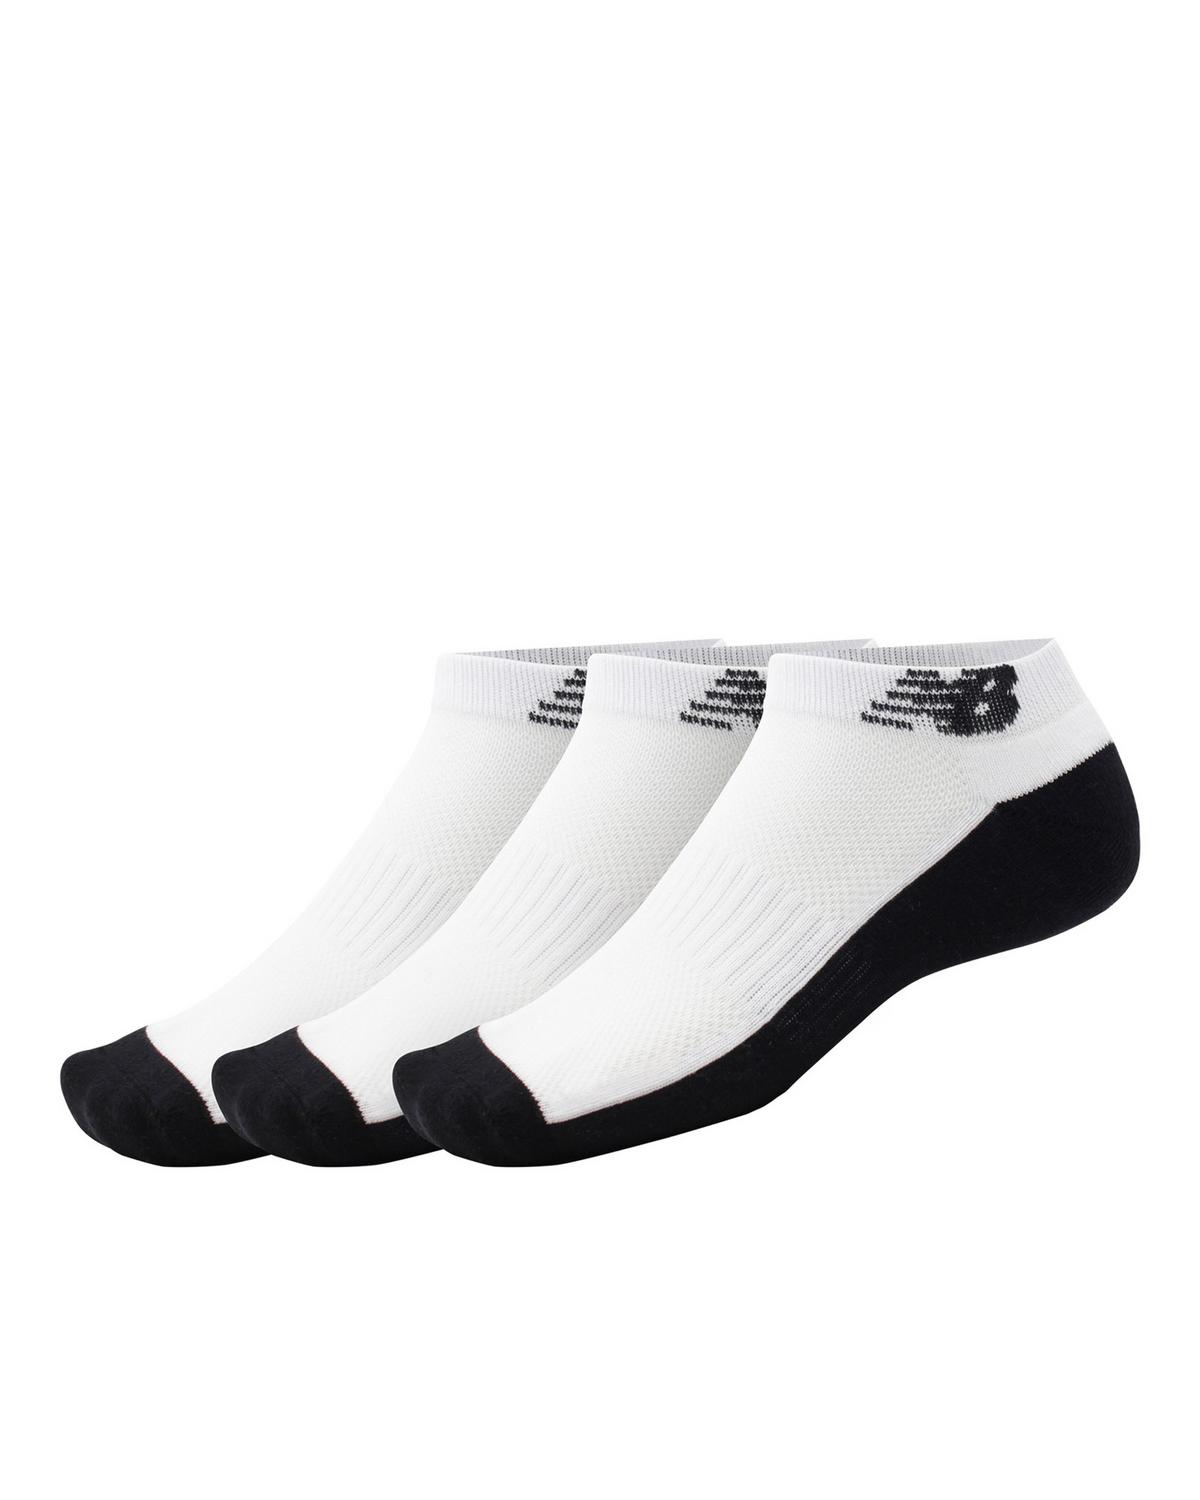 New Balance Core Cushioned No Show Socks - 3 Pack -  White